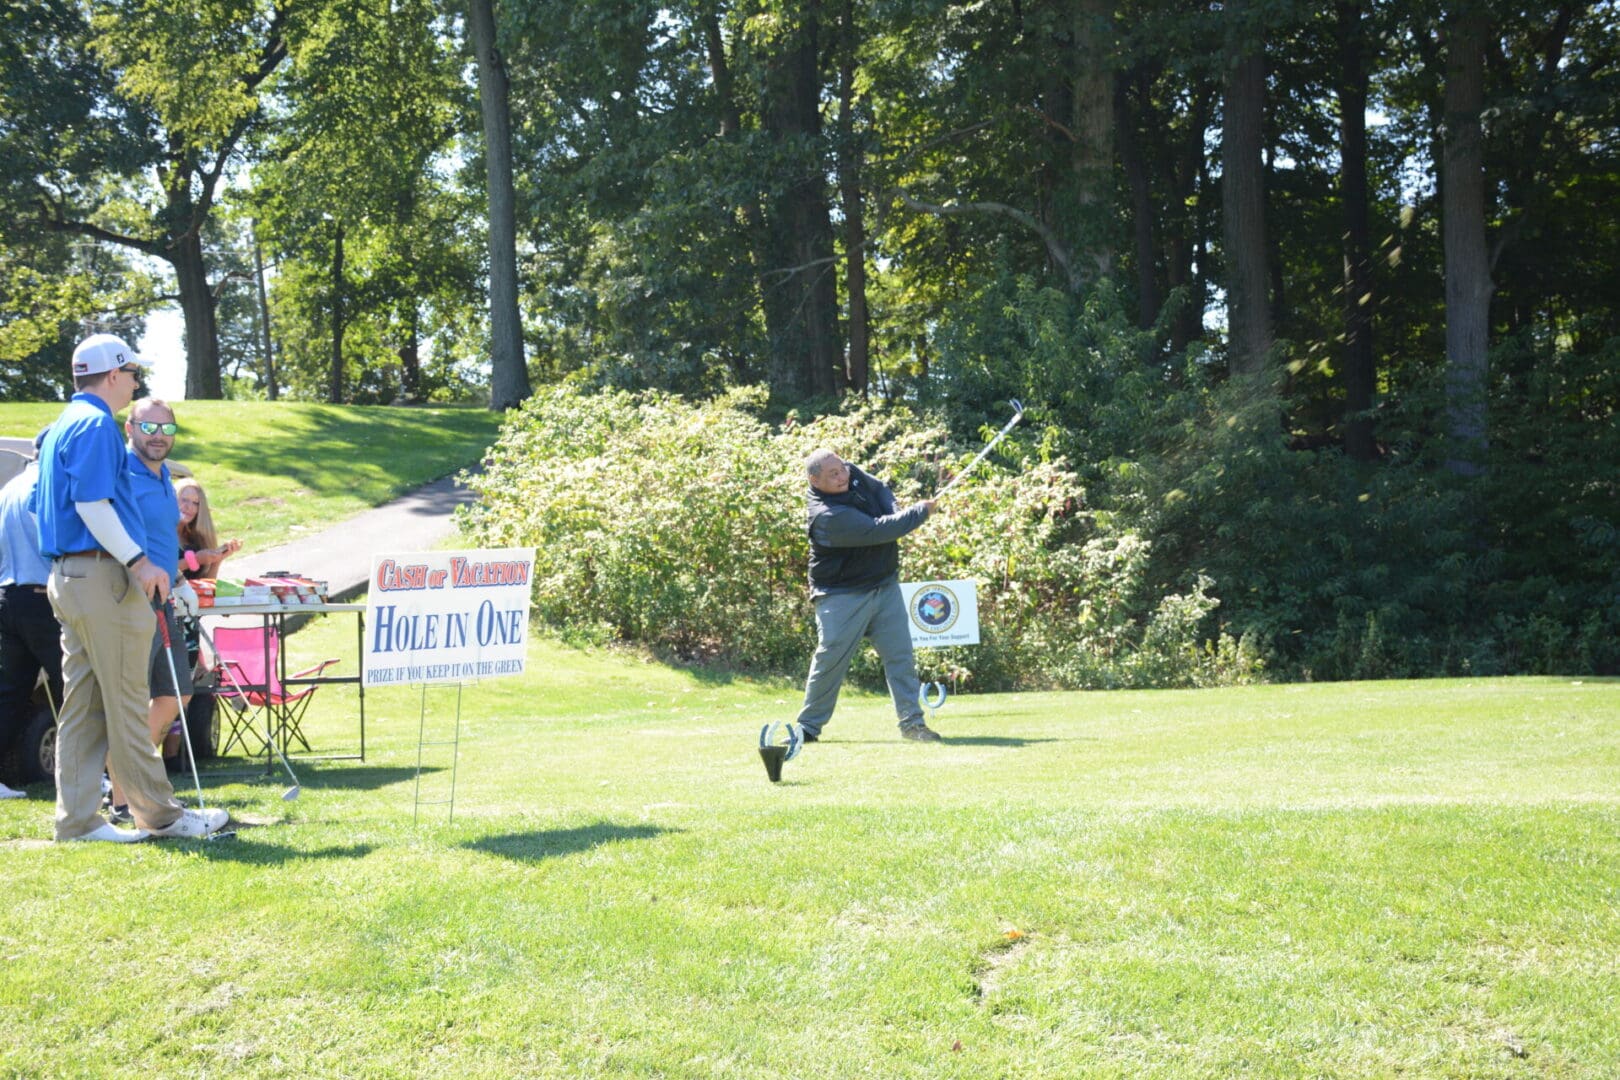 A man swinging a golf club at a golf tournament.